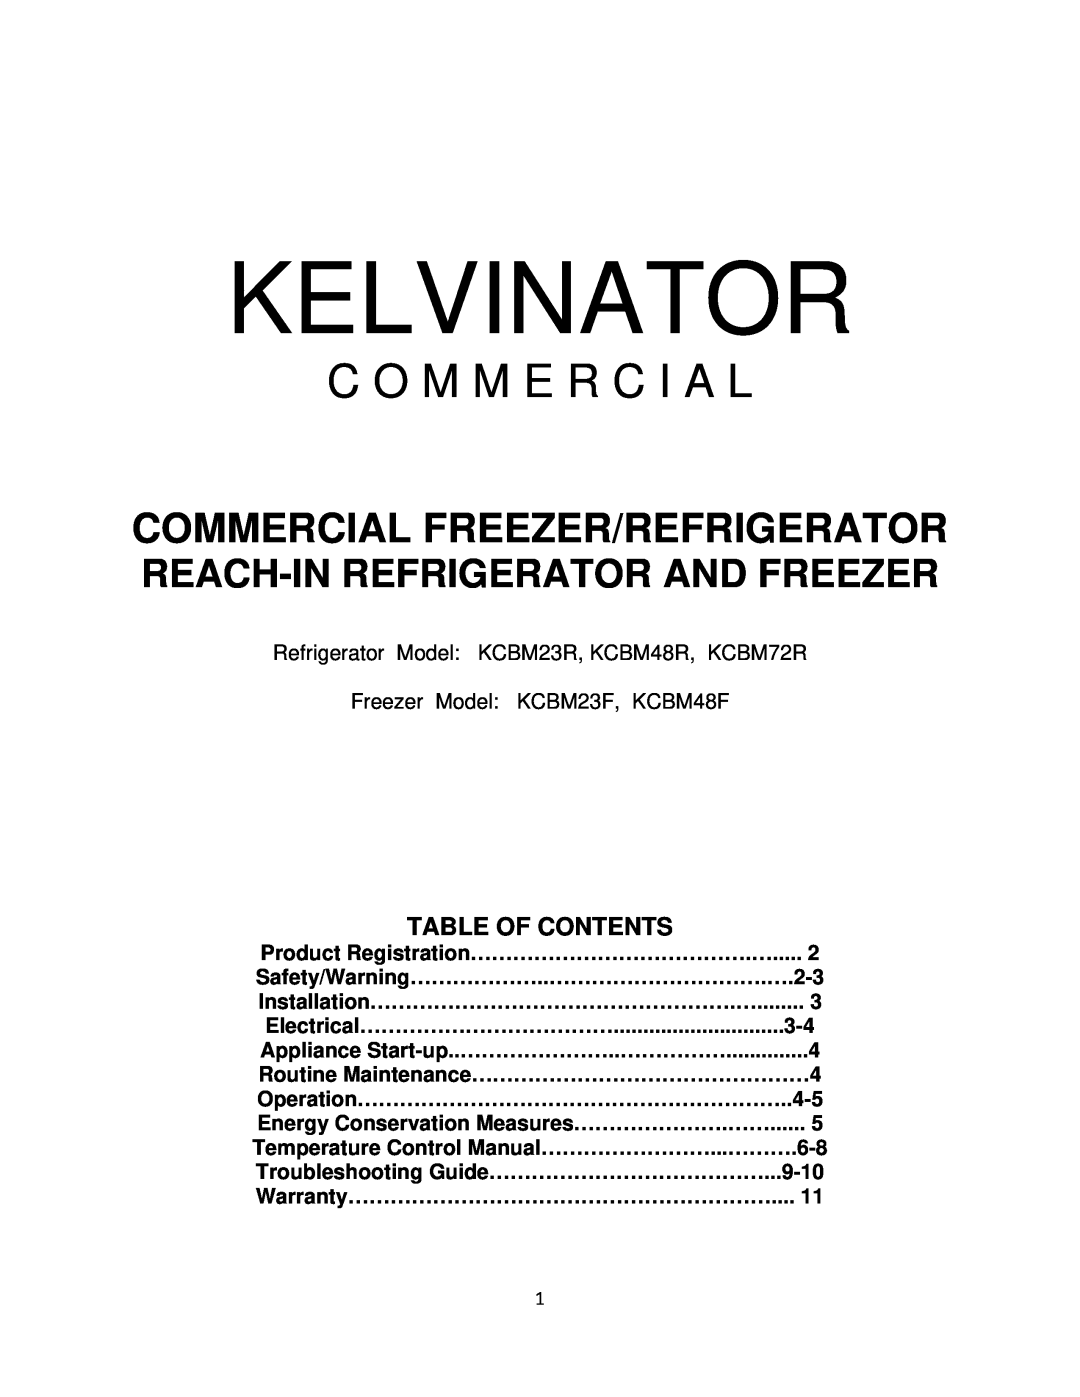 Kelvinator KCBM48R, KCBM72R warranty Kelvinator, C O M M E R C I A L, Commercial Freezer/Refrigerator, Table Of Contents 